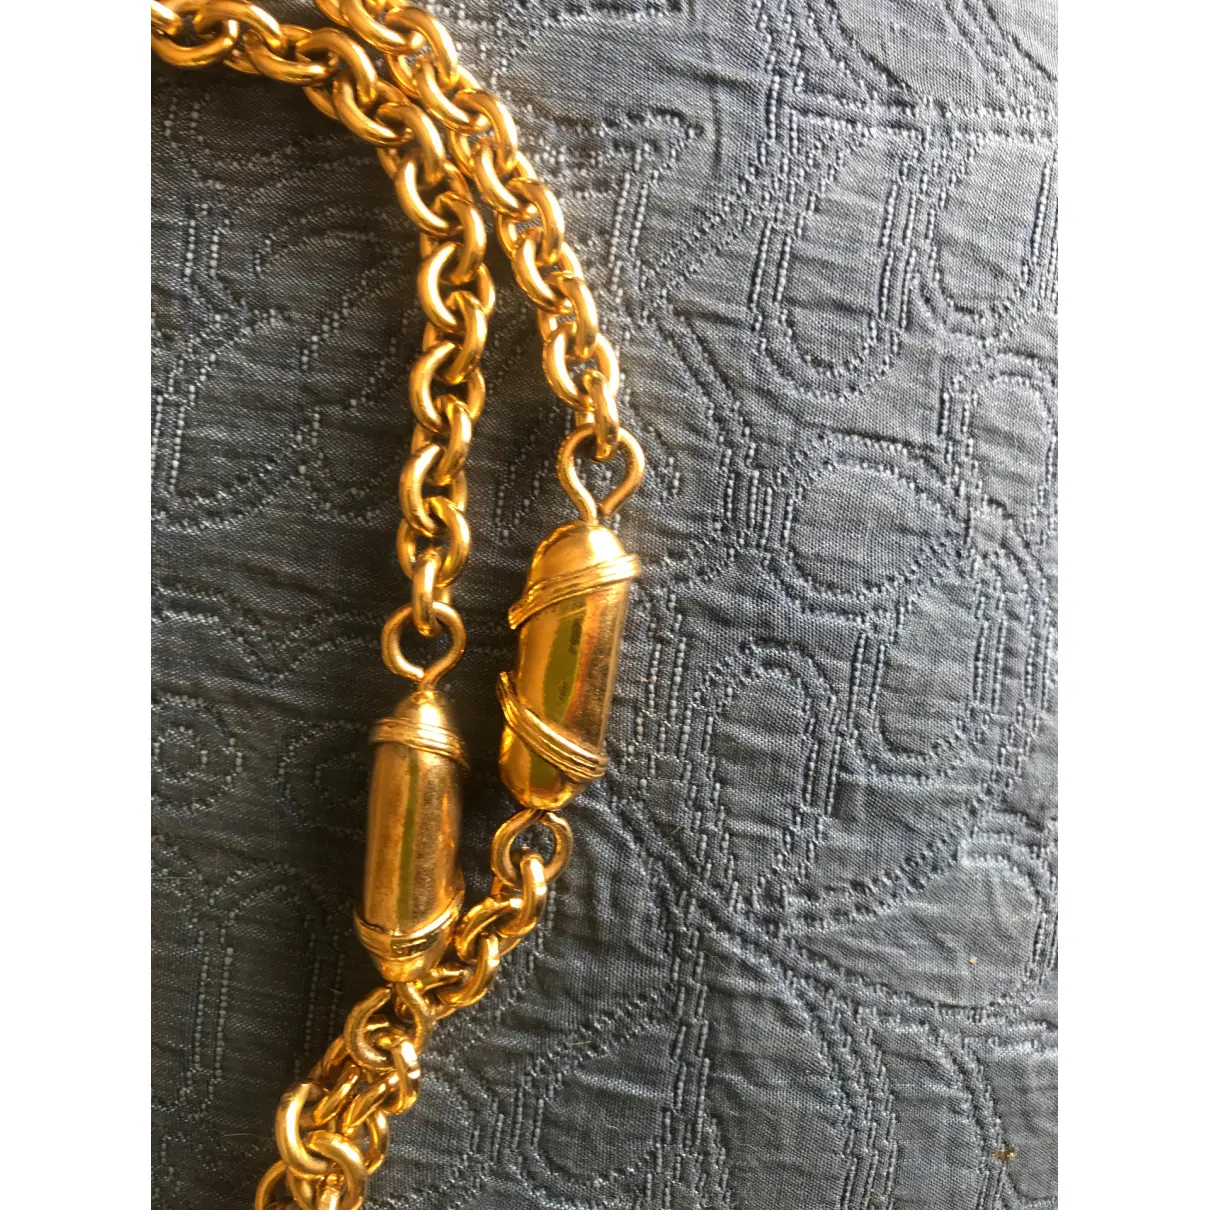 Buy Chanel Gripoix long necklace online - Vintage